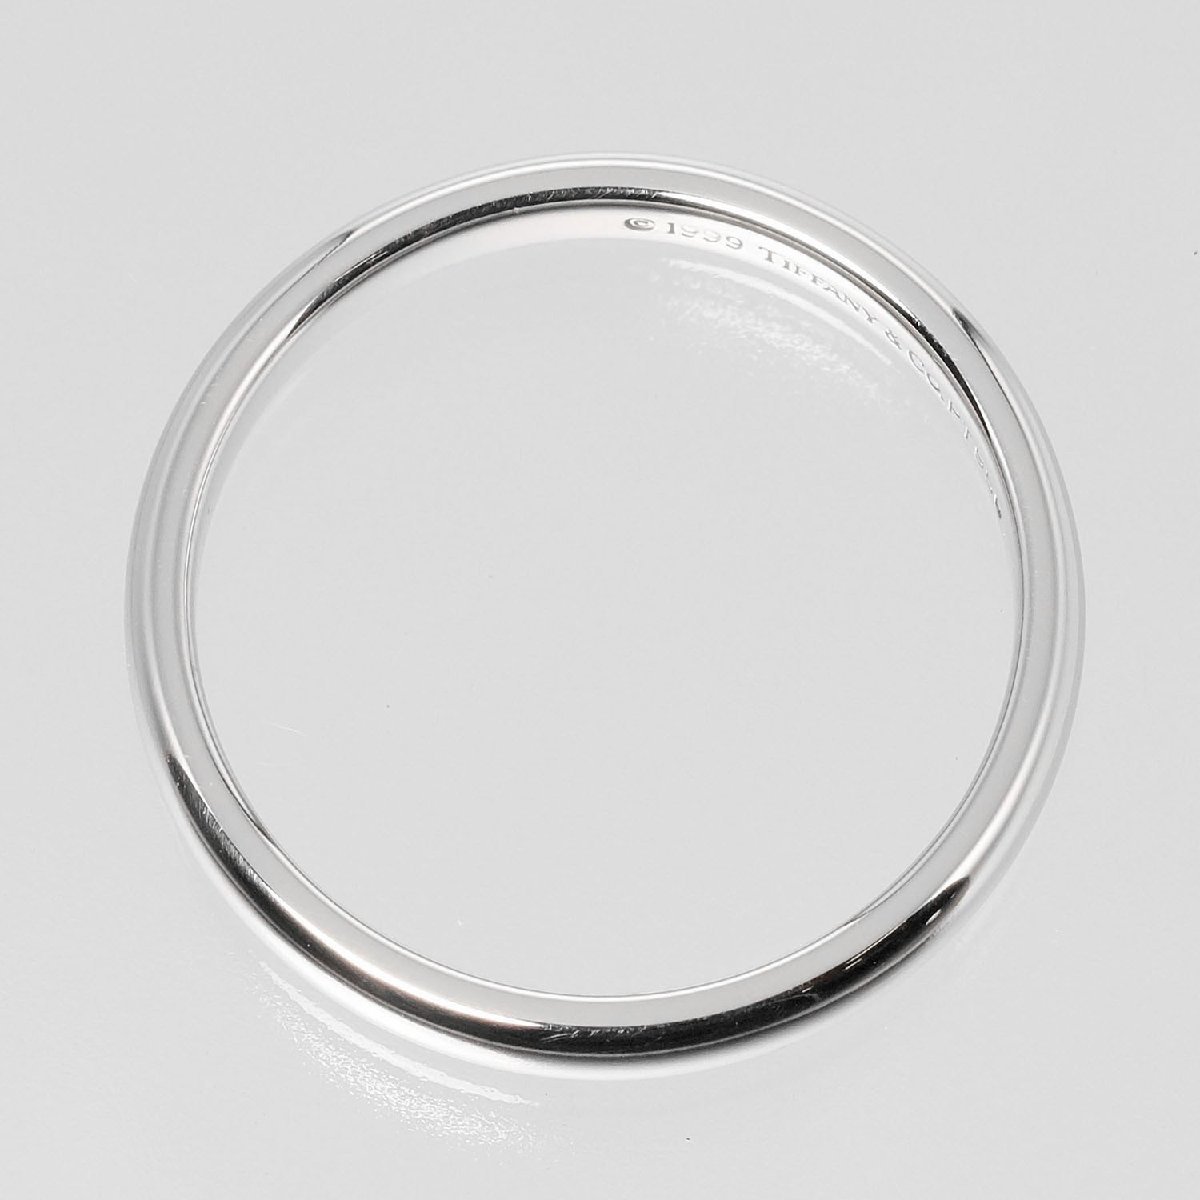  Tiffany four ever свадьба кольцо кольцо 13.5 номер Classic частота 3mm модель 4.82g Pt950 платина [I182323010] б/у 